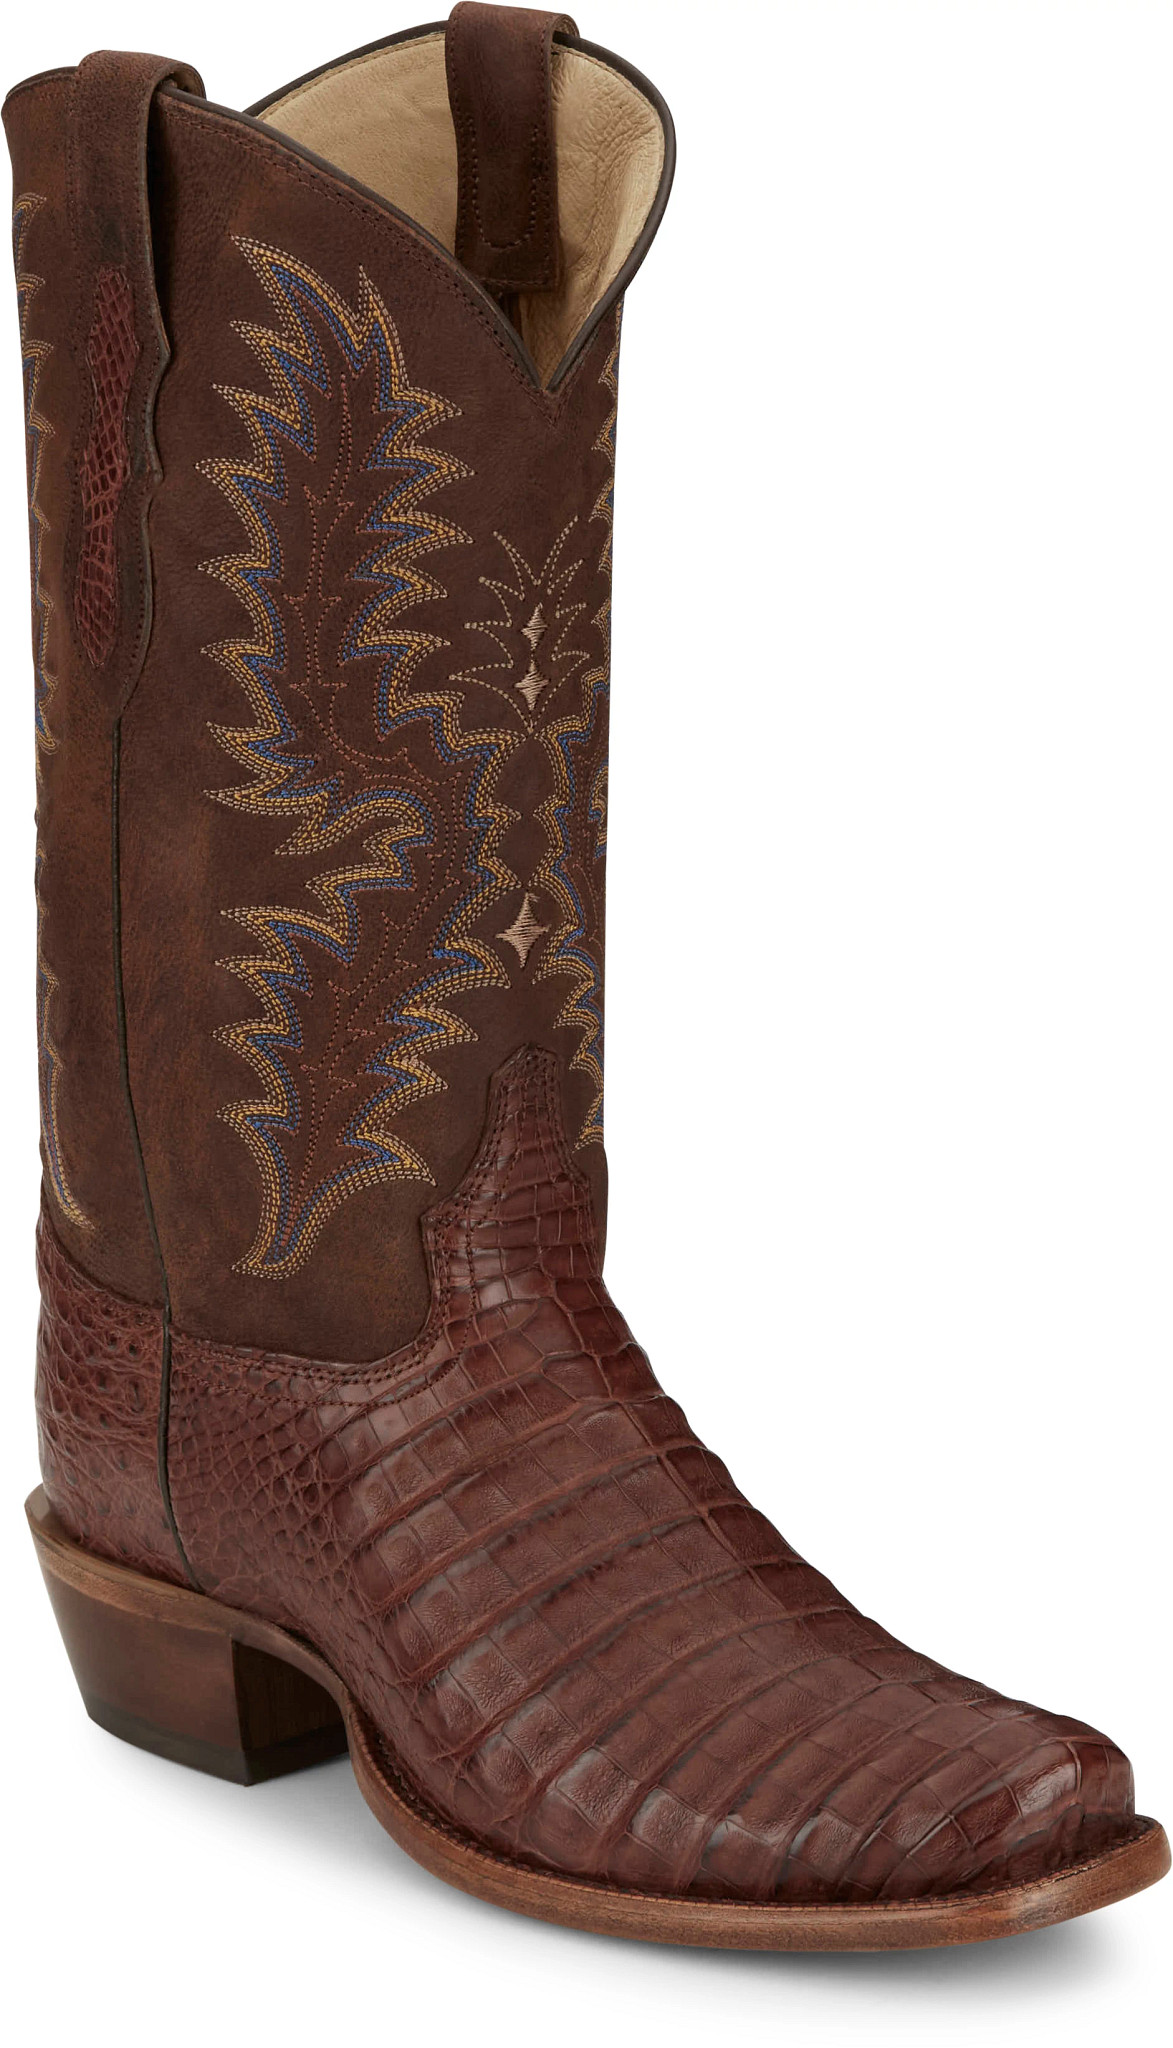 Limited Edition Western Boots | Tony Lama